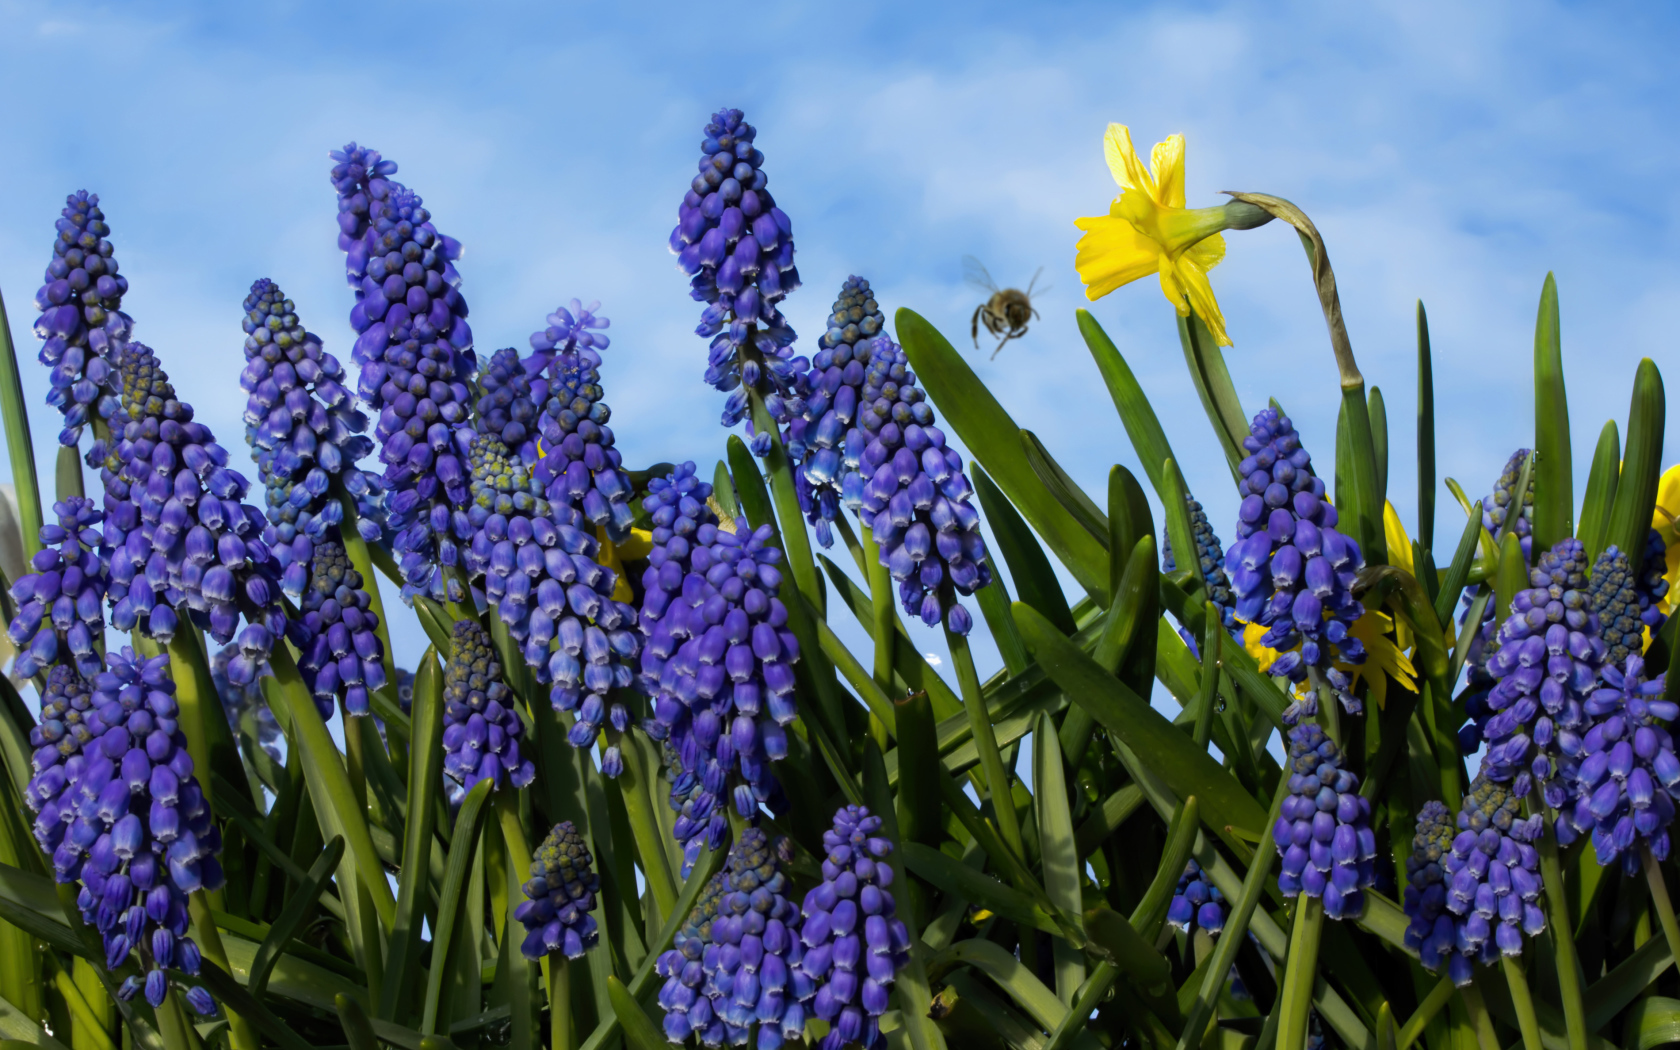 Blue muscari flowers against the blue sky